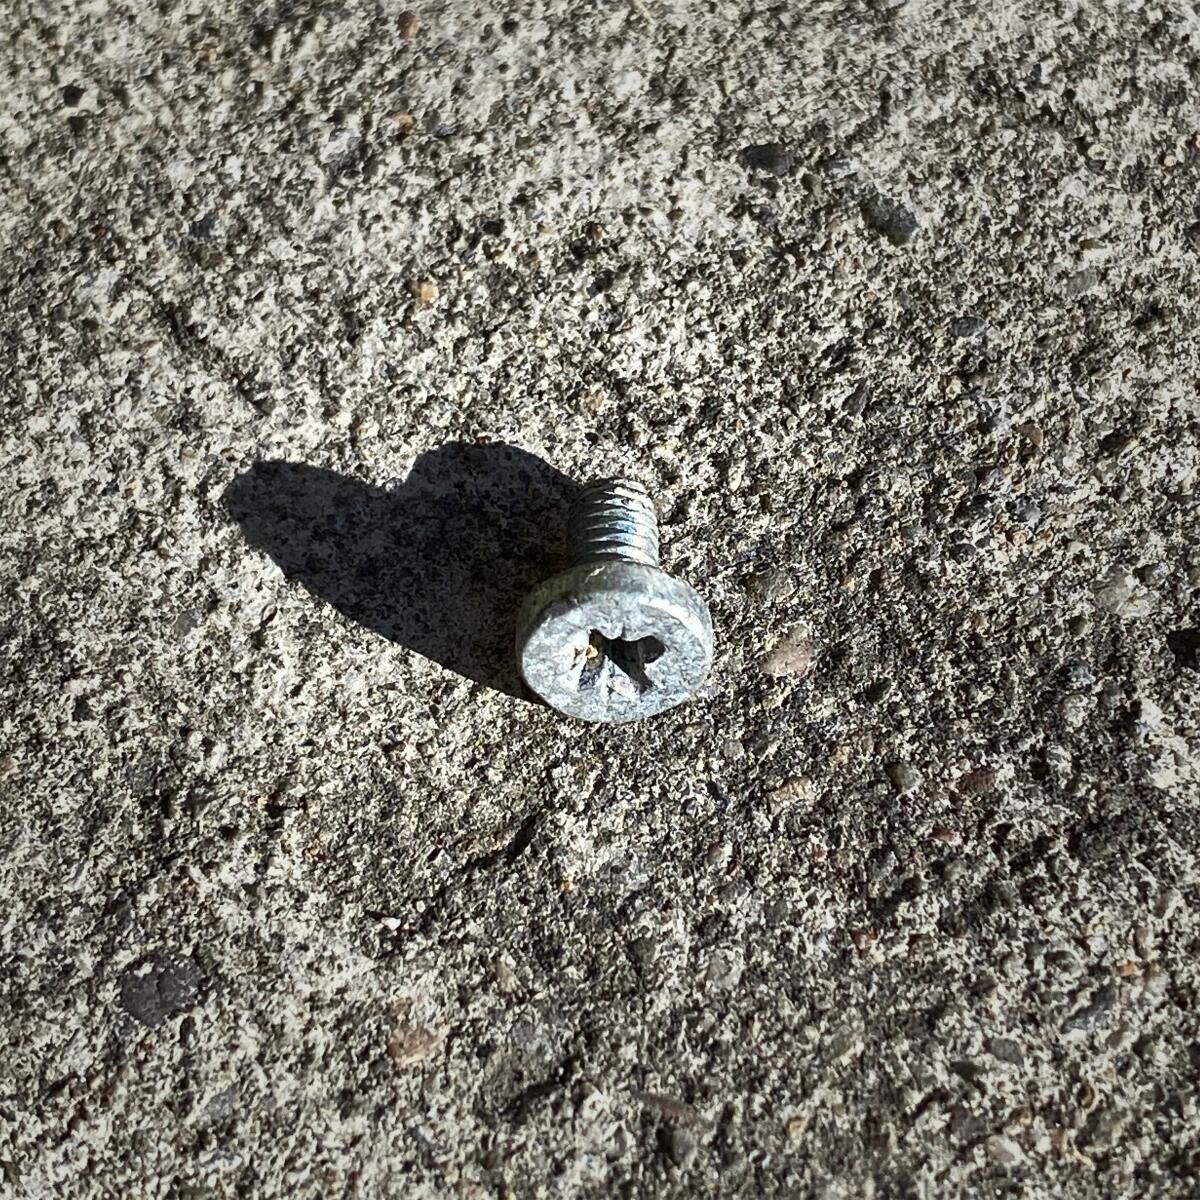 A screw casts a heart-shaped shadow.